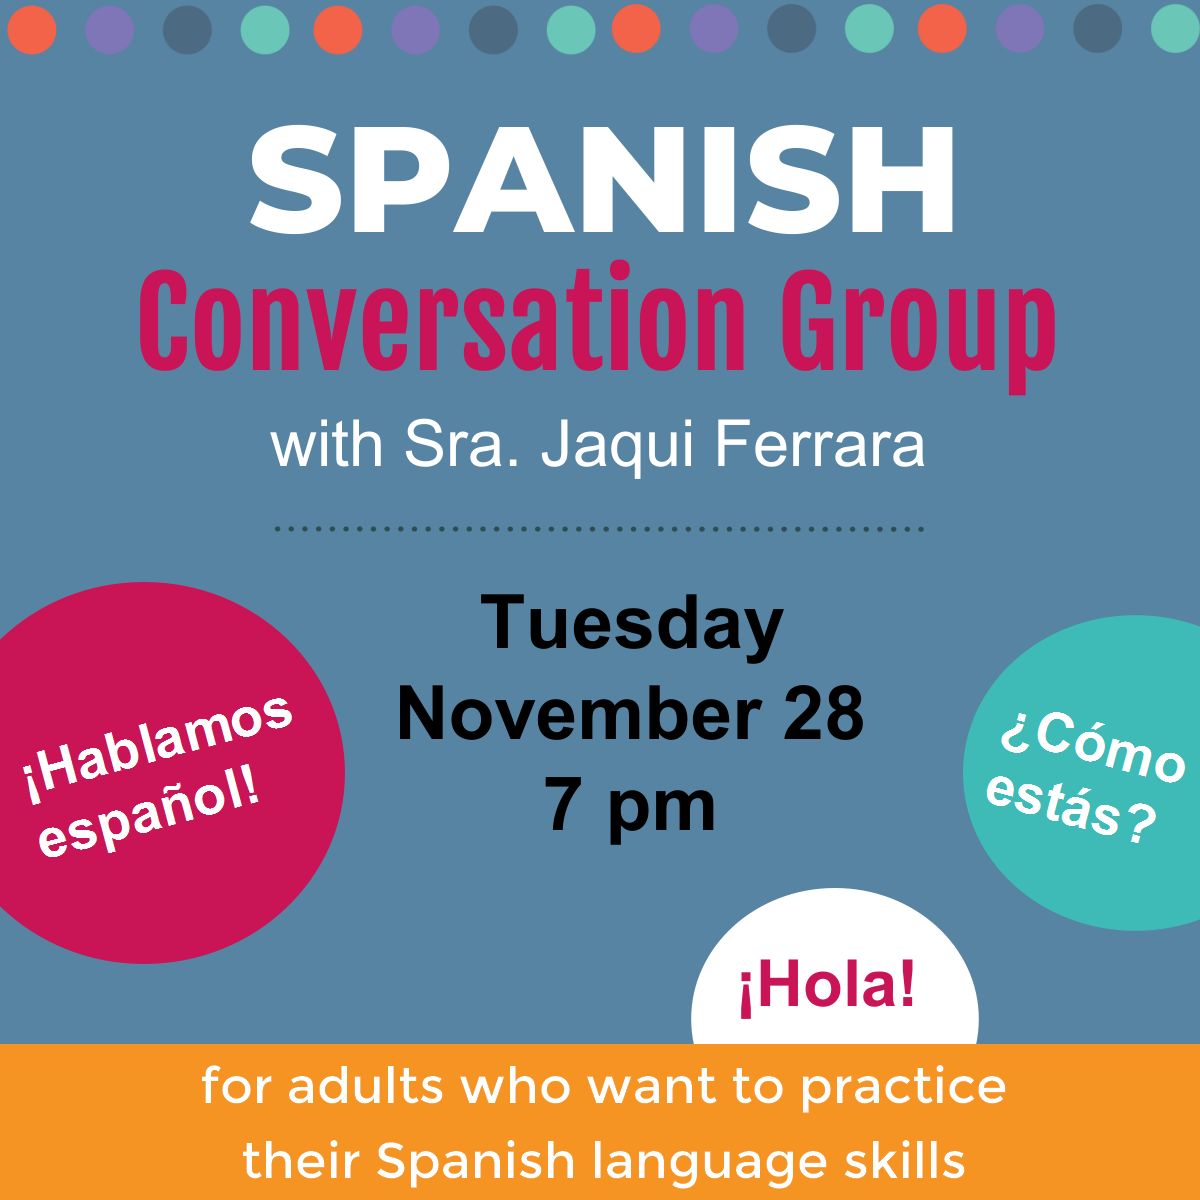 Spanish Conversation Group Tuesday, Nov 28 at 7 pm